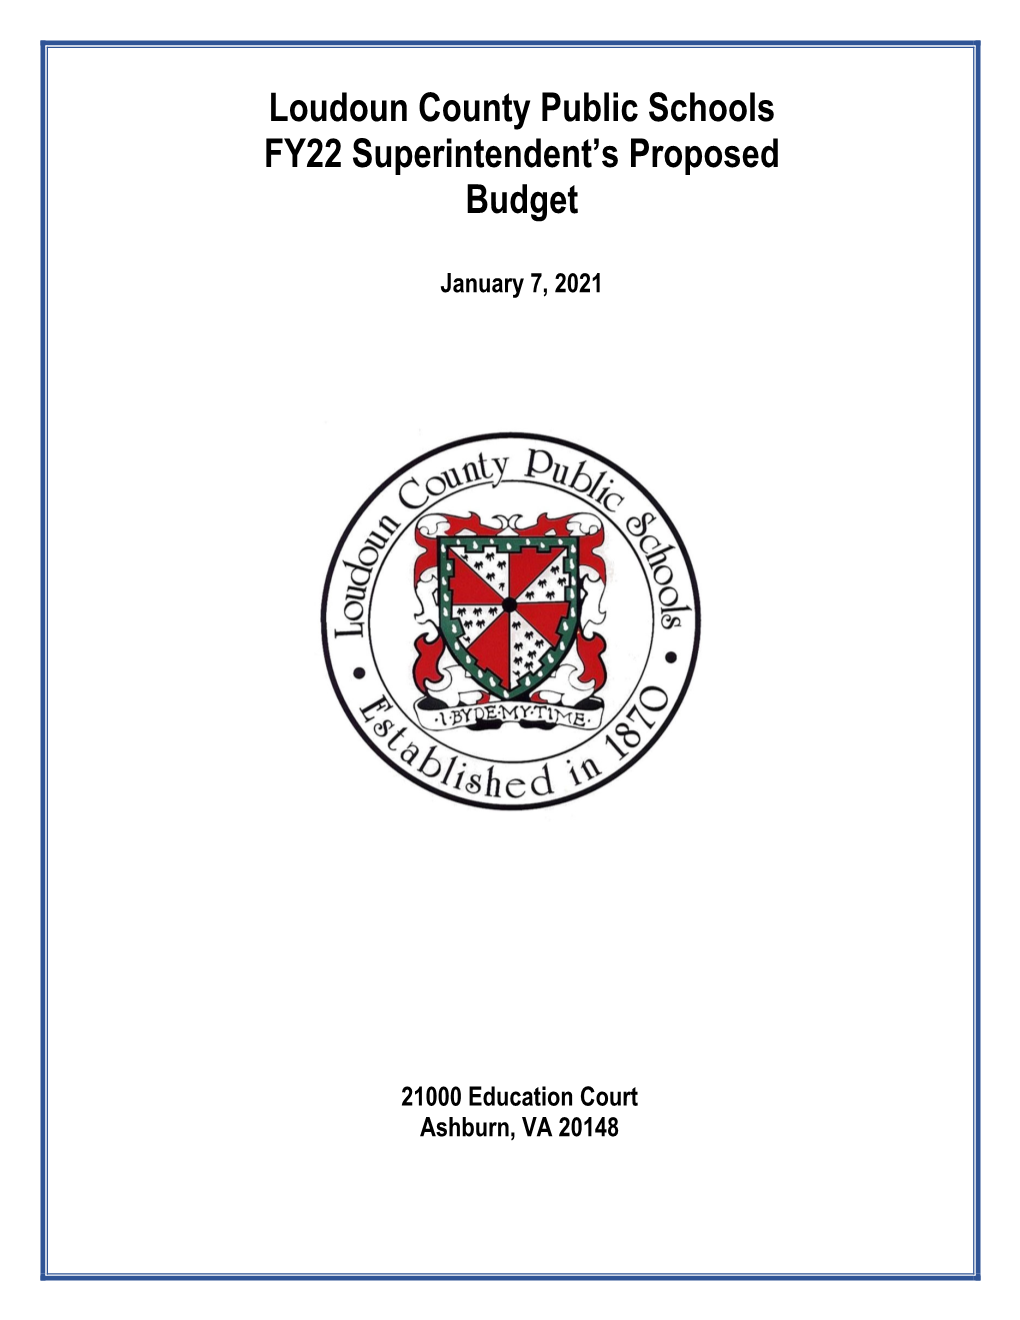 Loudoun County Public Schools FY22 Superintendent's Proposed Budget